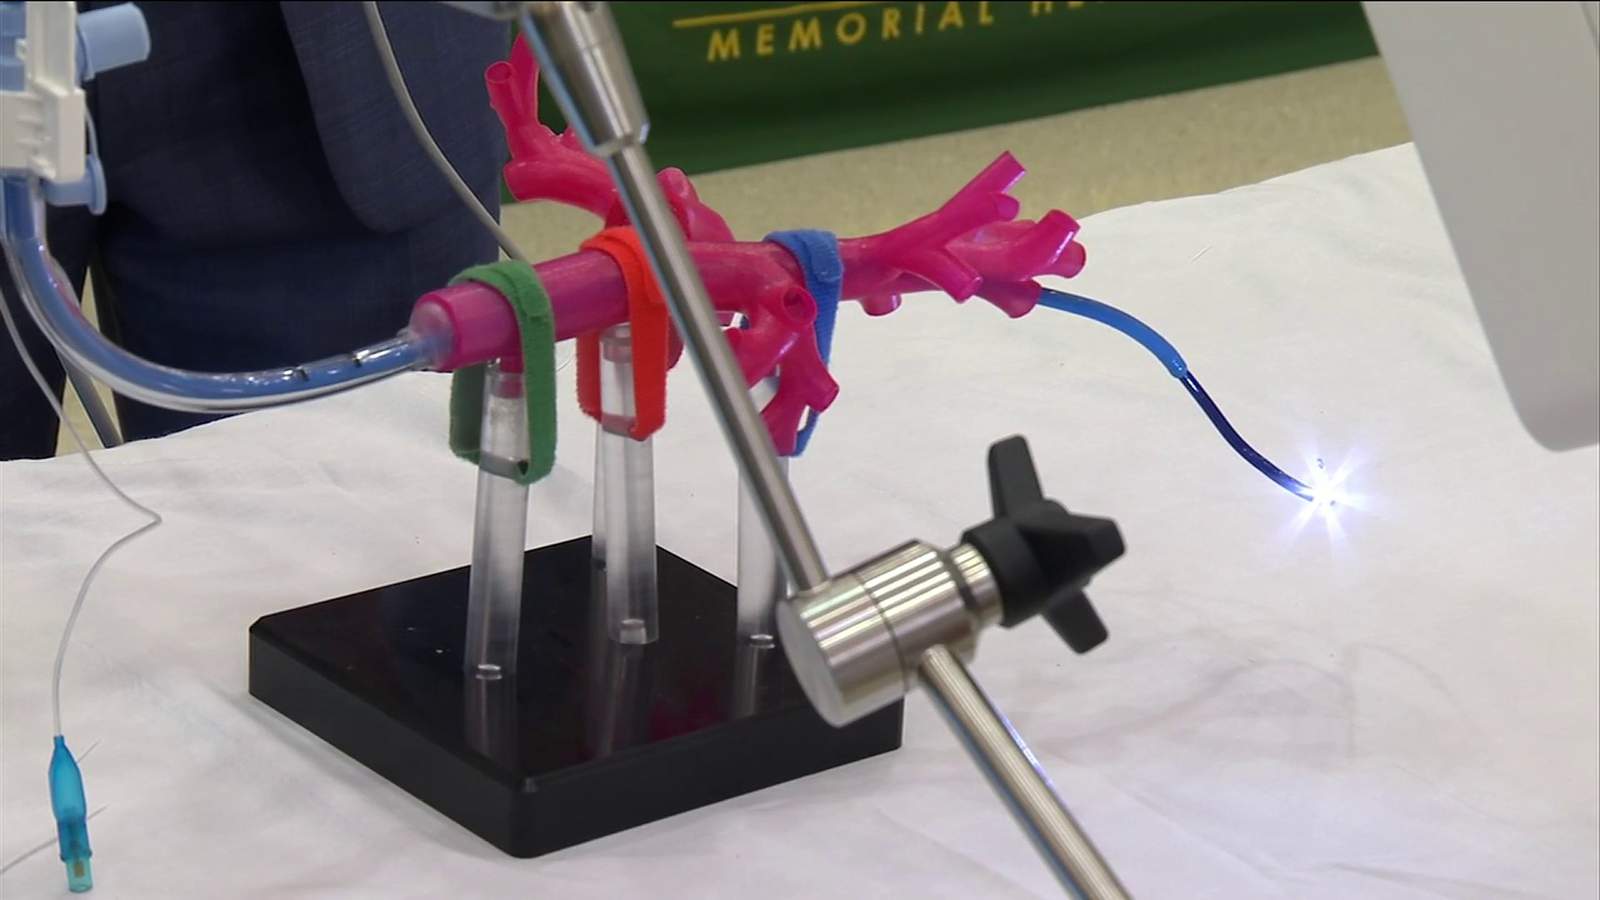 Memorial Hospital unveils new tool to diagnose lung cancer sooner